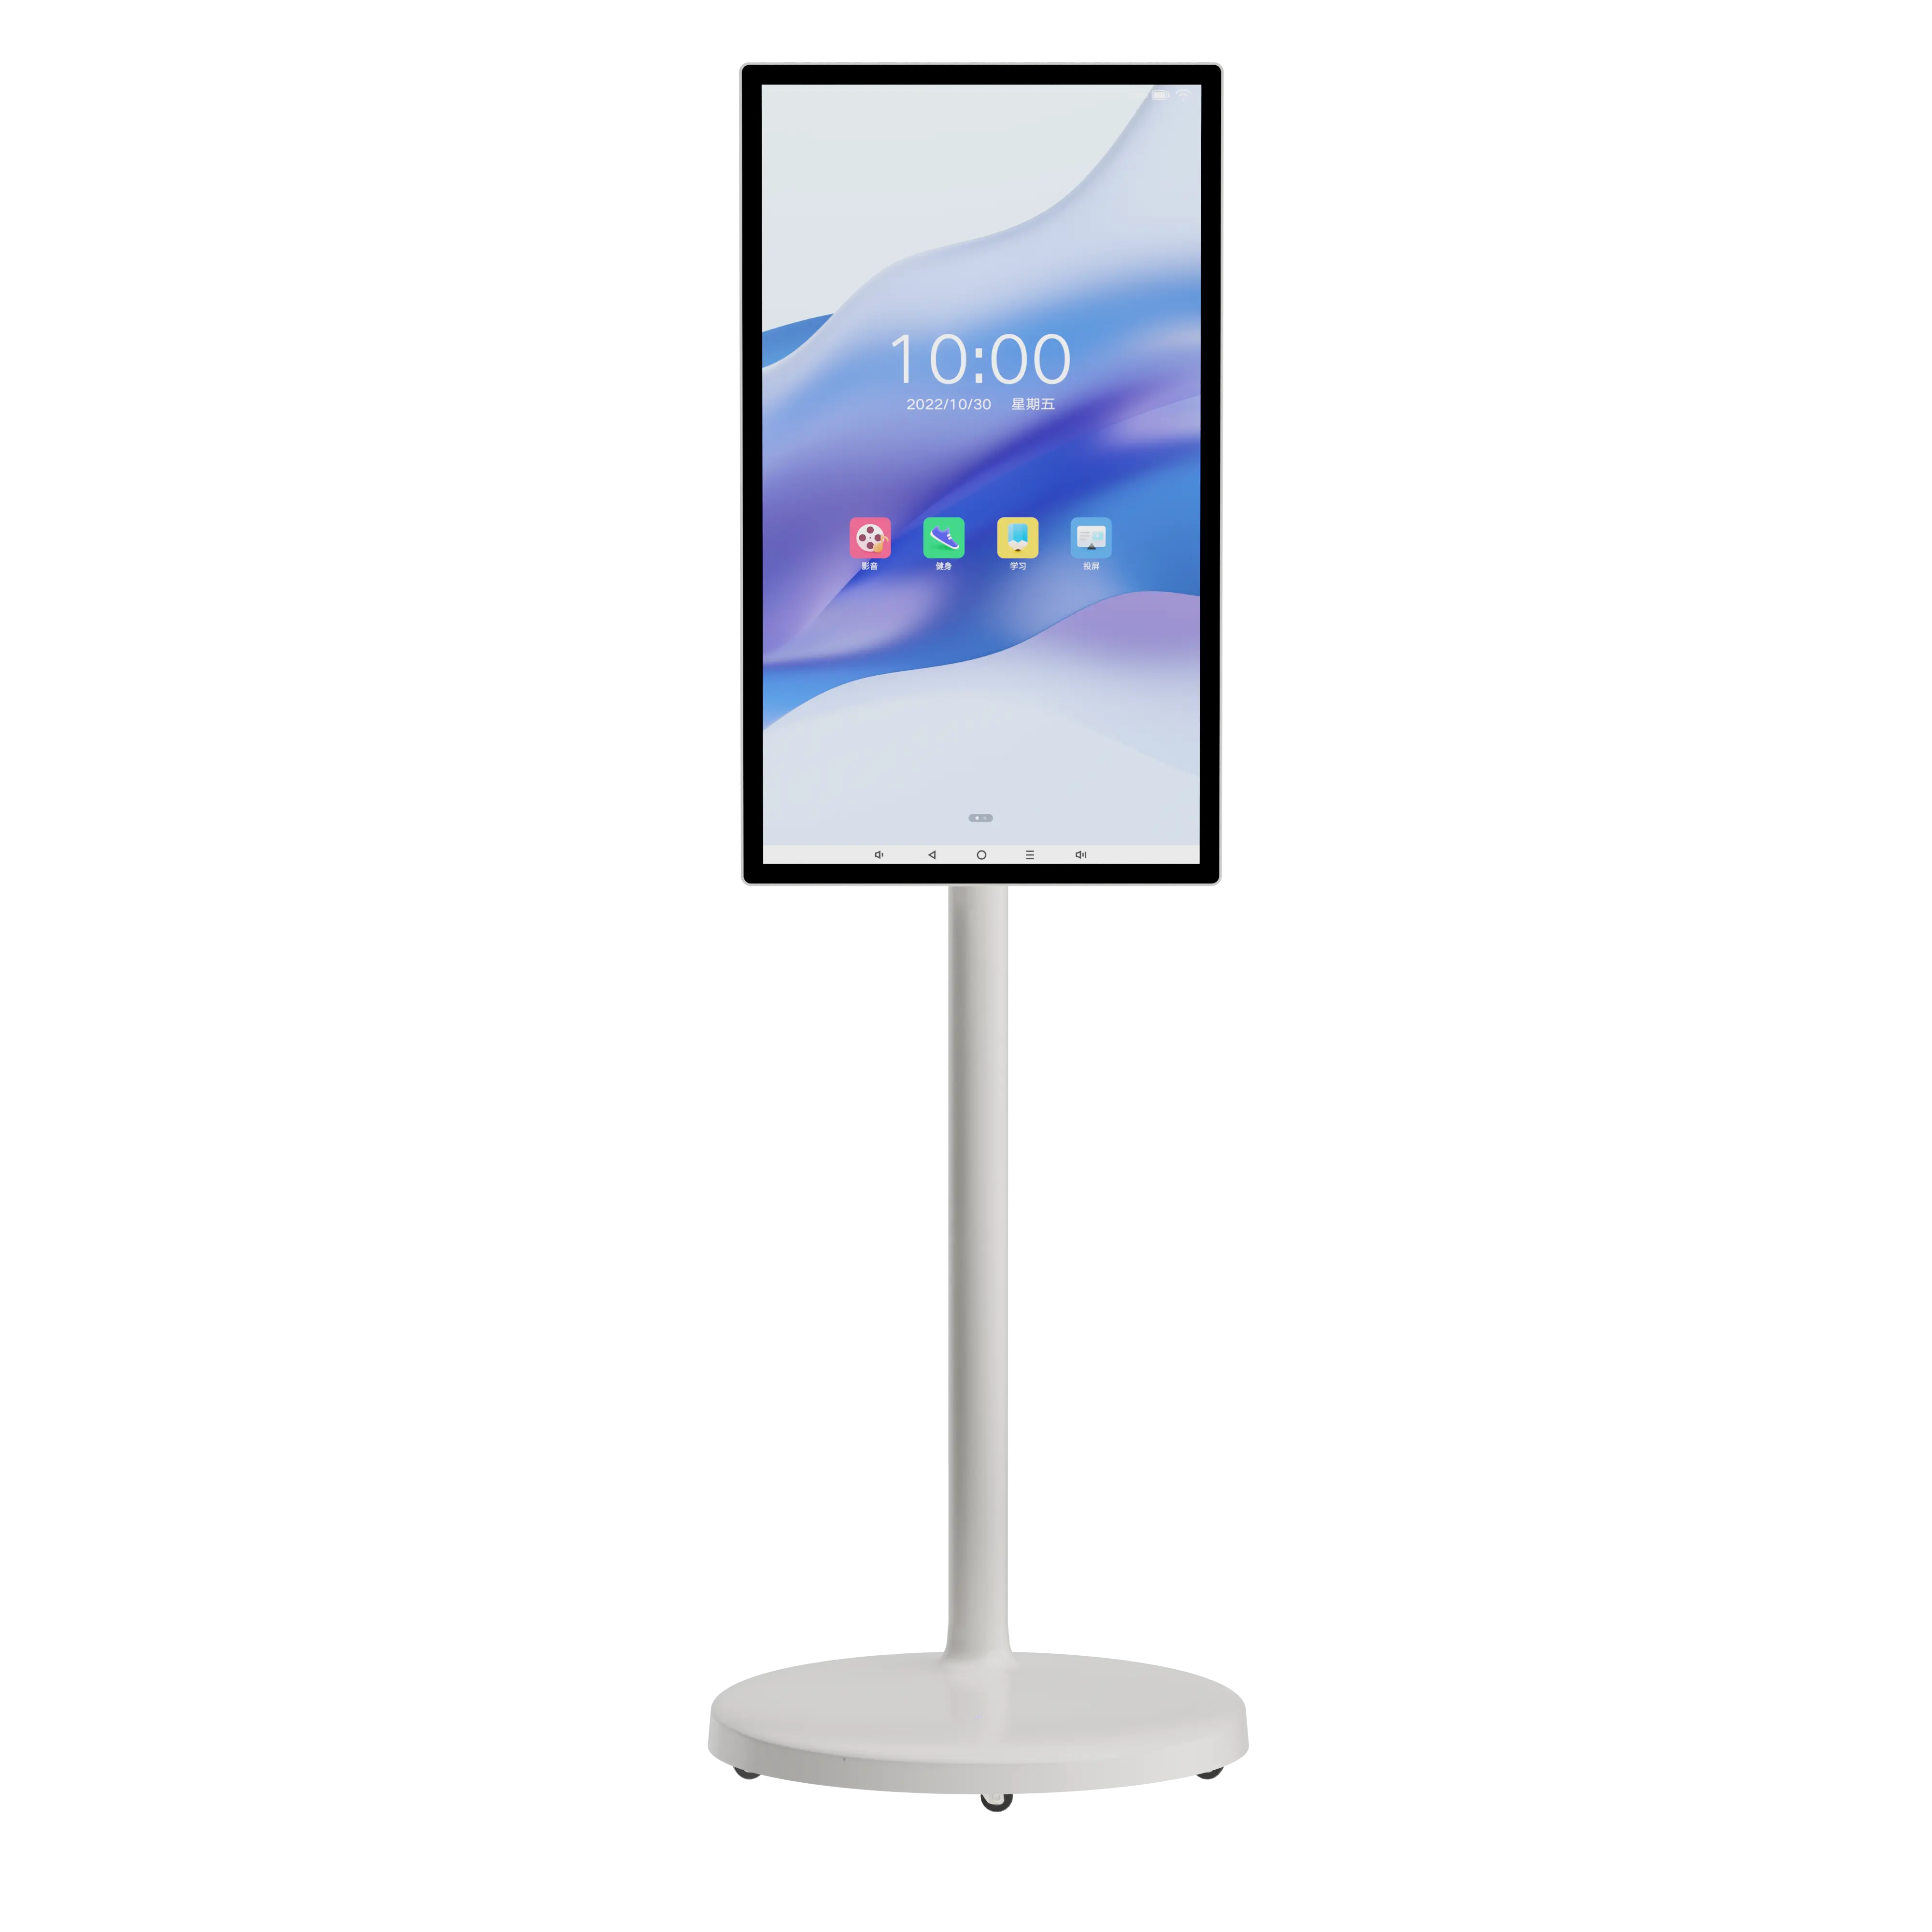 Lg stand by me tv rollable smart screen touch дисплей для помещений android 12 рекламная цифровая вывеска 1080p FHD LED LCD TV